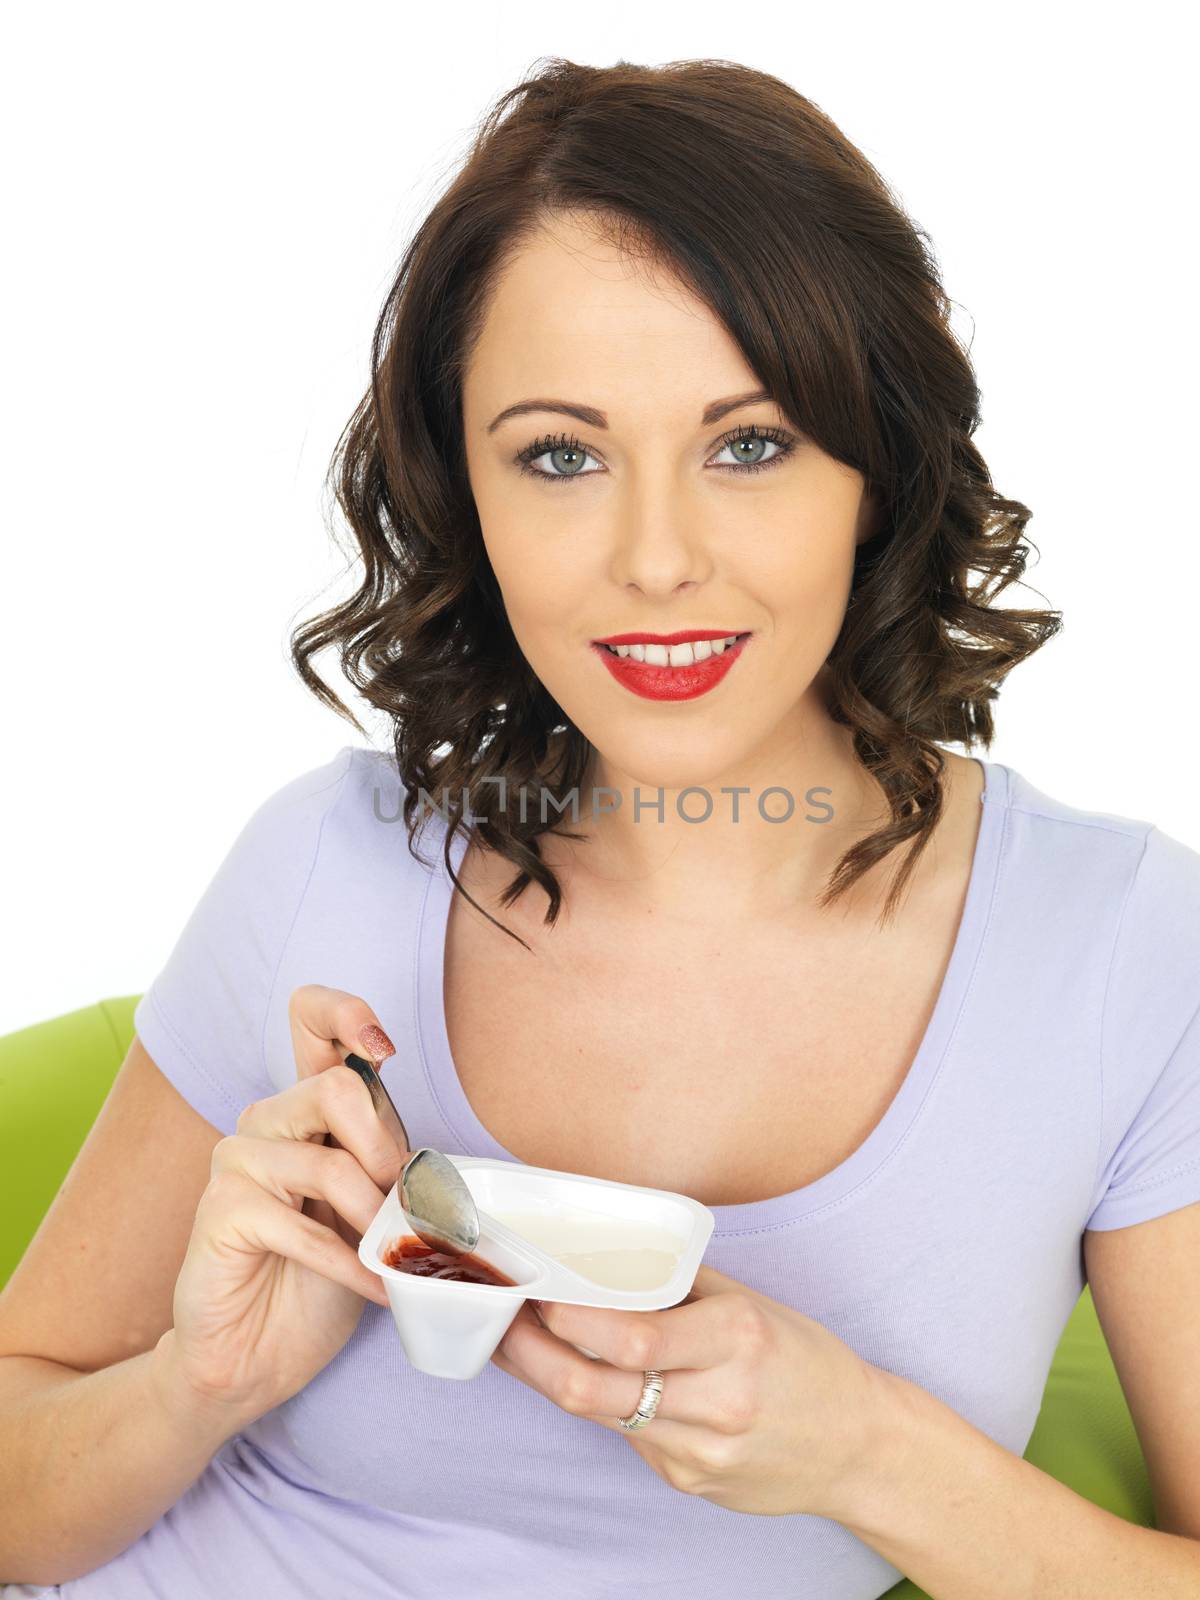 Young Woman Eating a Yogurt by Whiteboxmedia